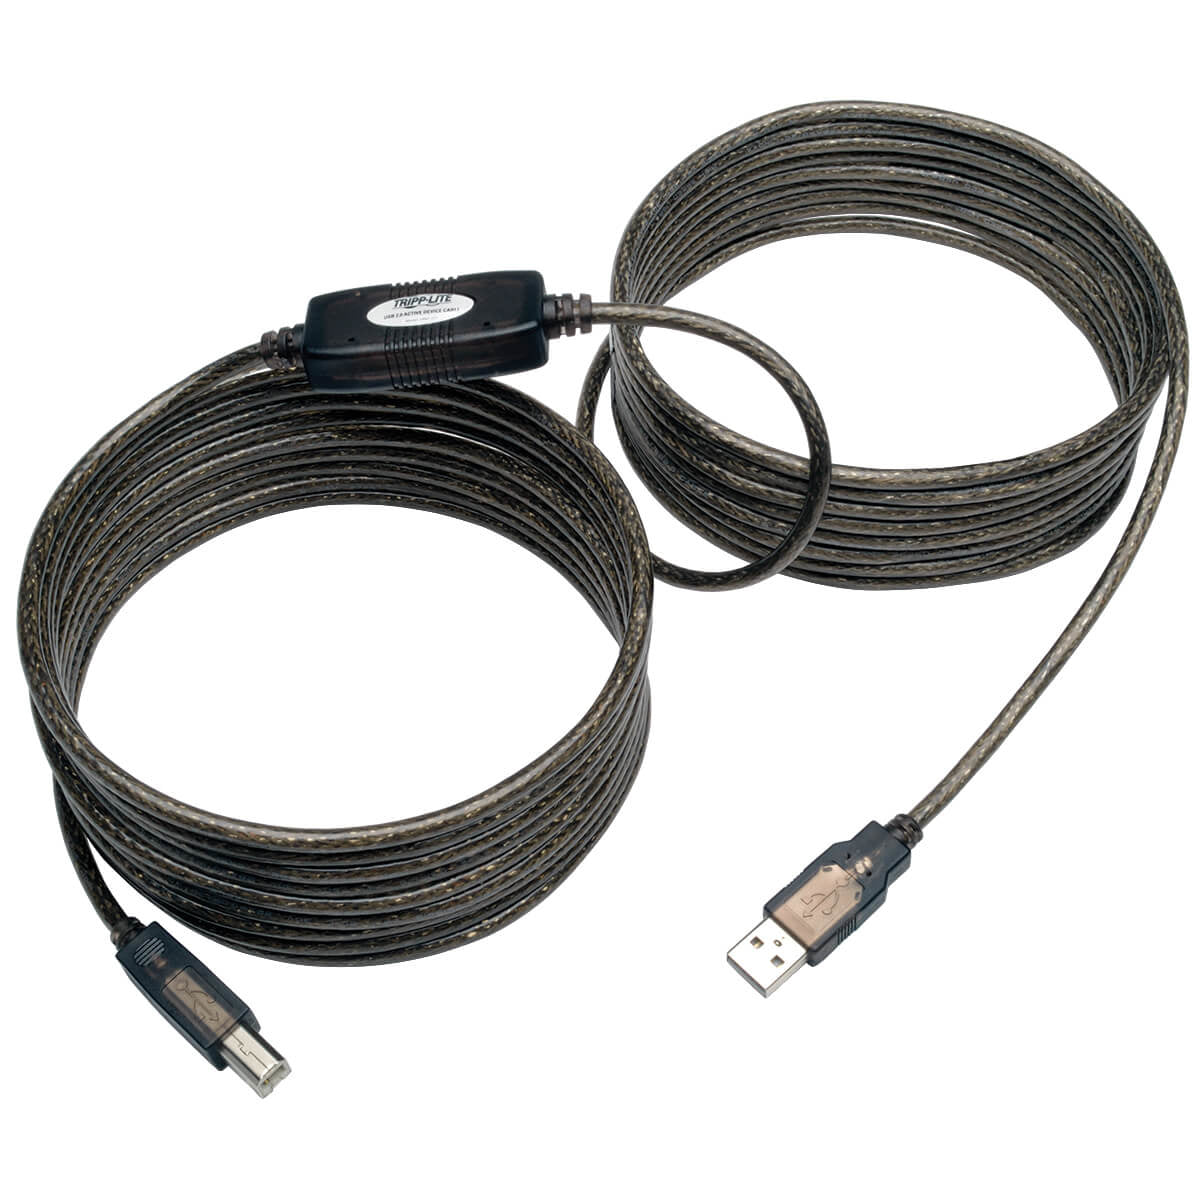 16.4ft (5m) USB 2.0 A/B Cable - Black, USB 2.0 Cables